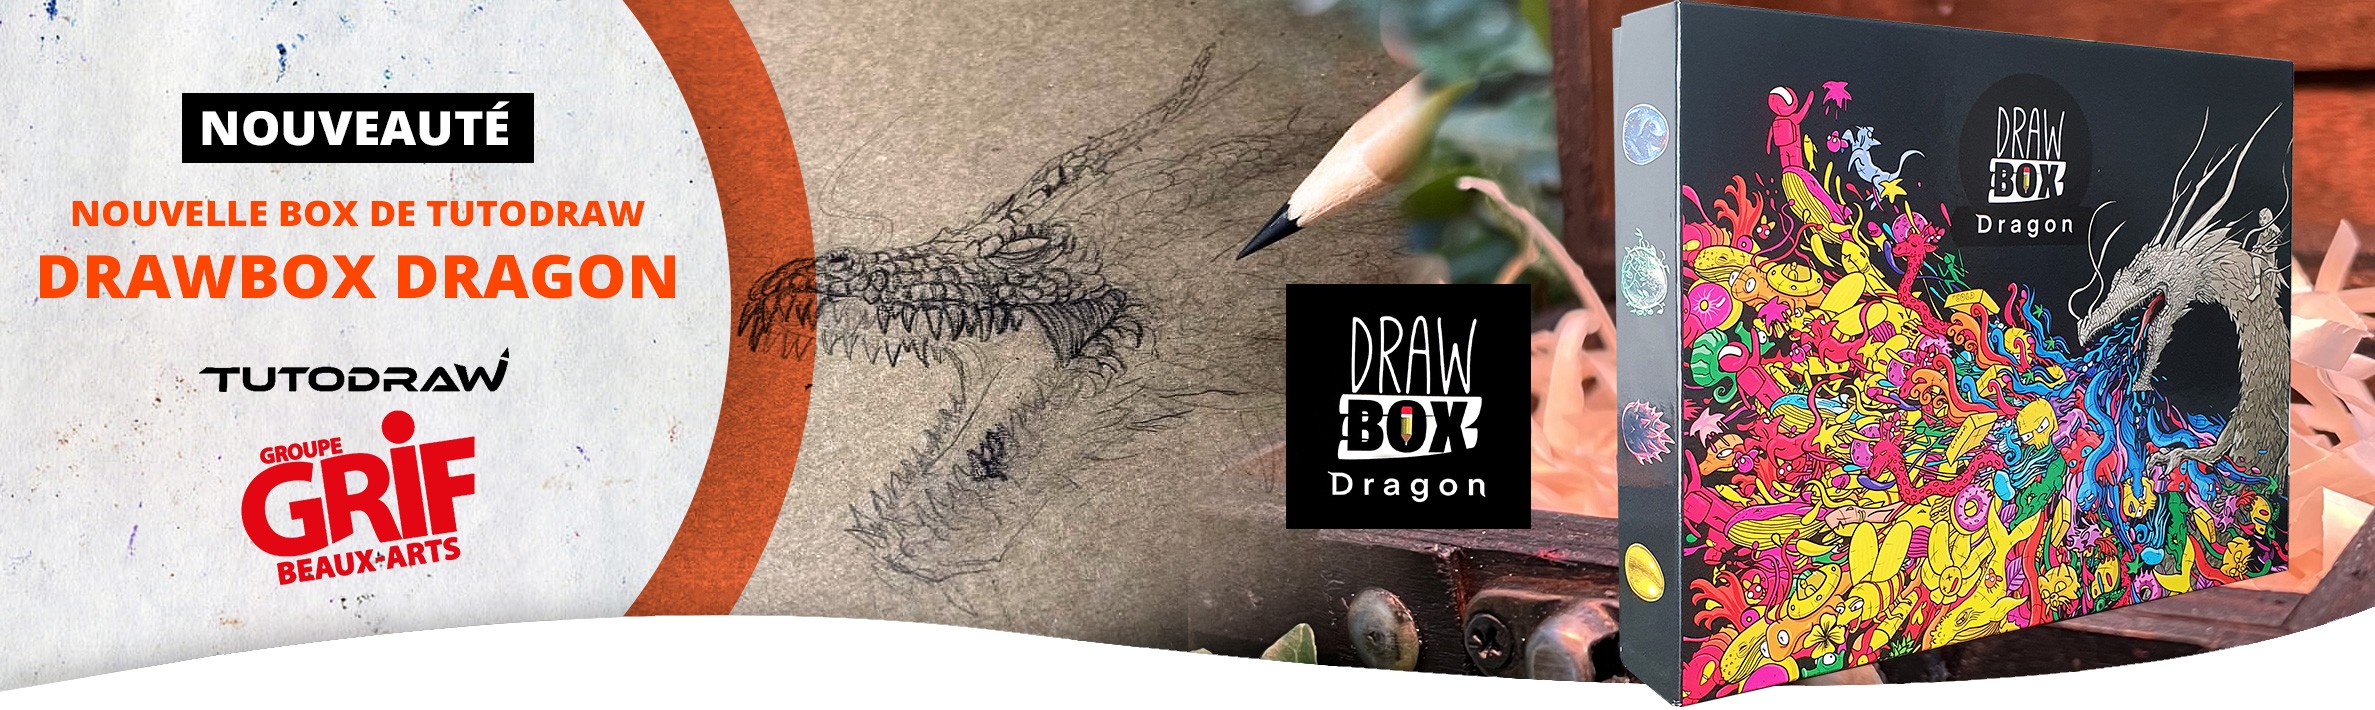 Drawbox Dragon